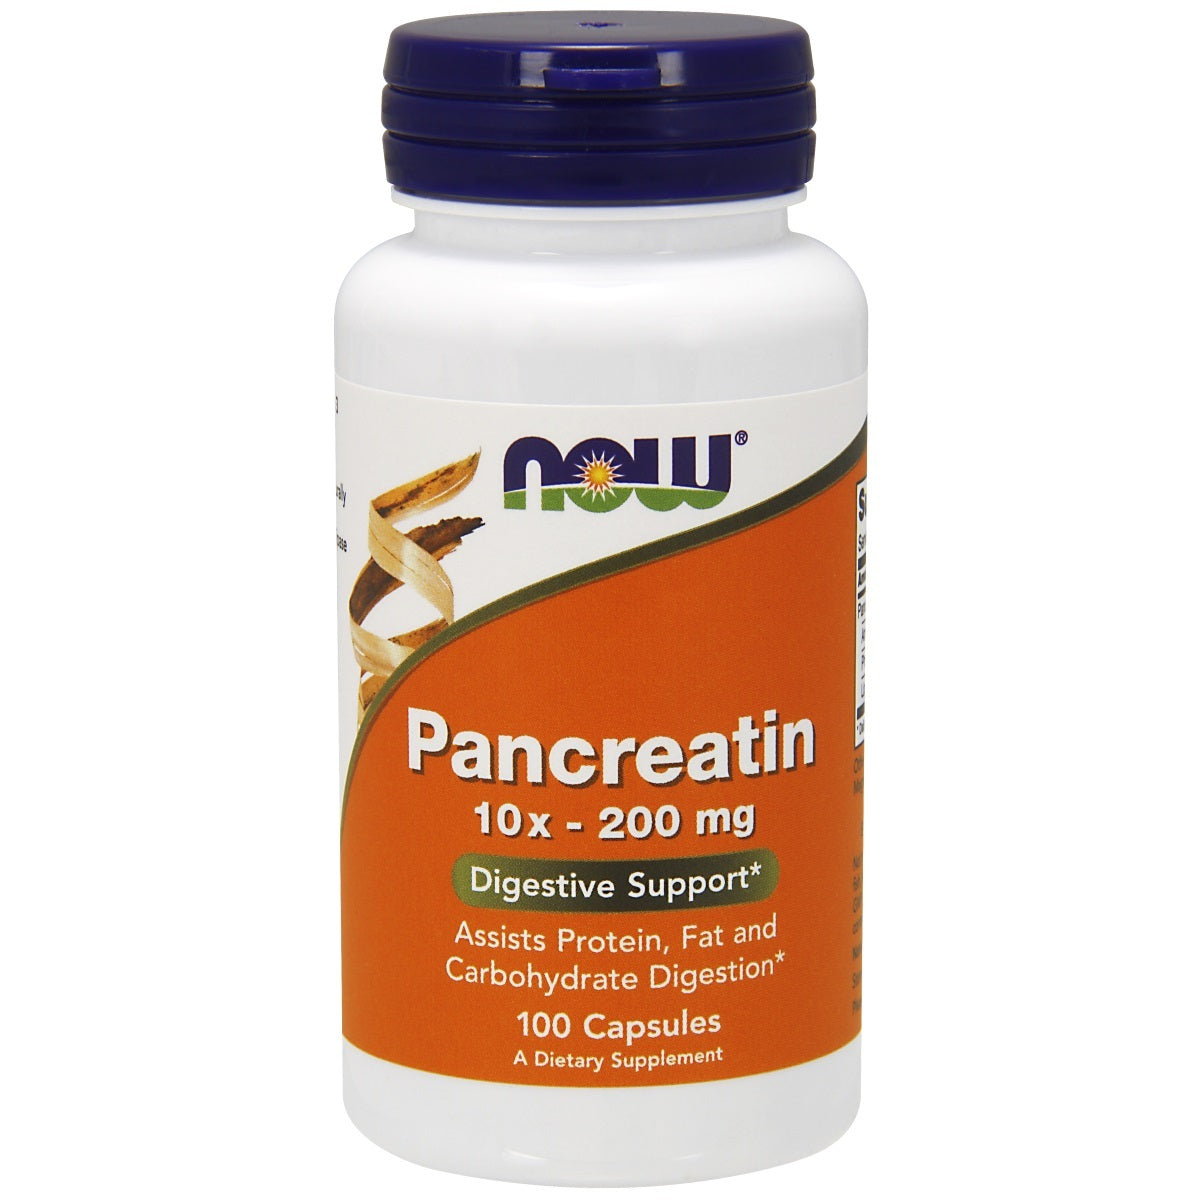 Primary image of Pancreatin 10x-200mg